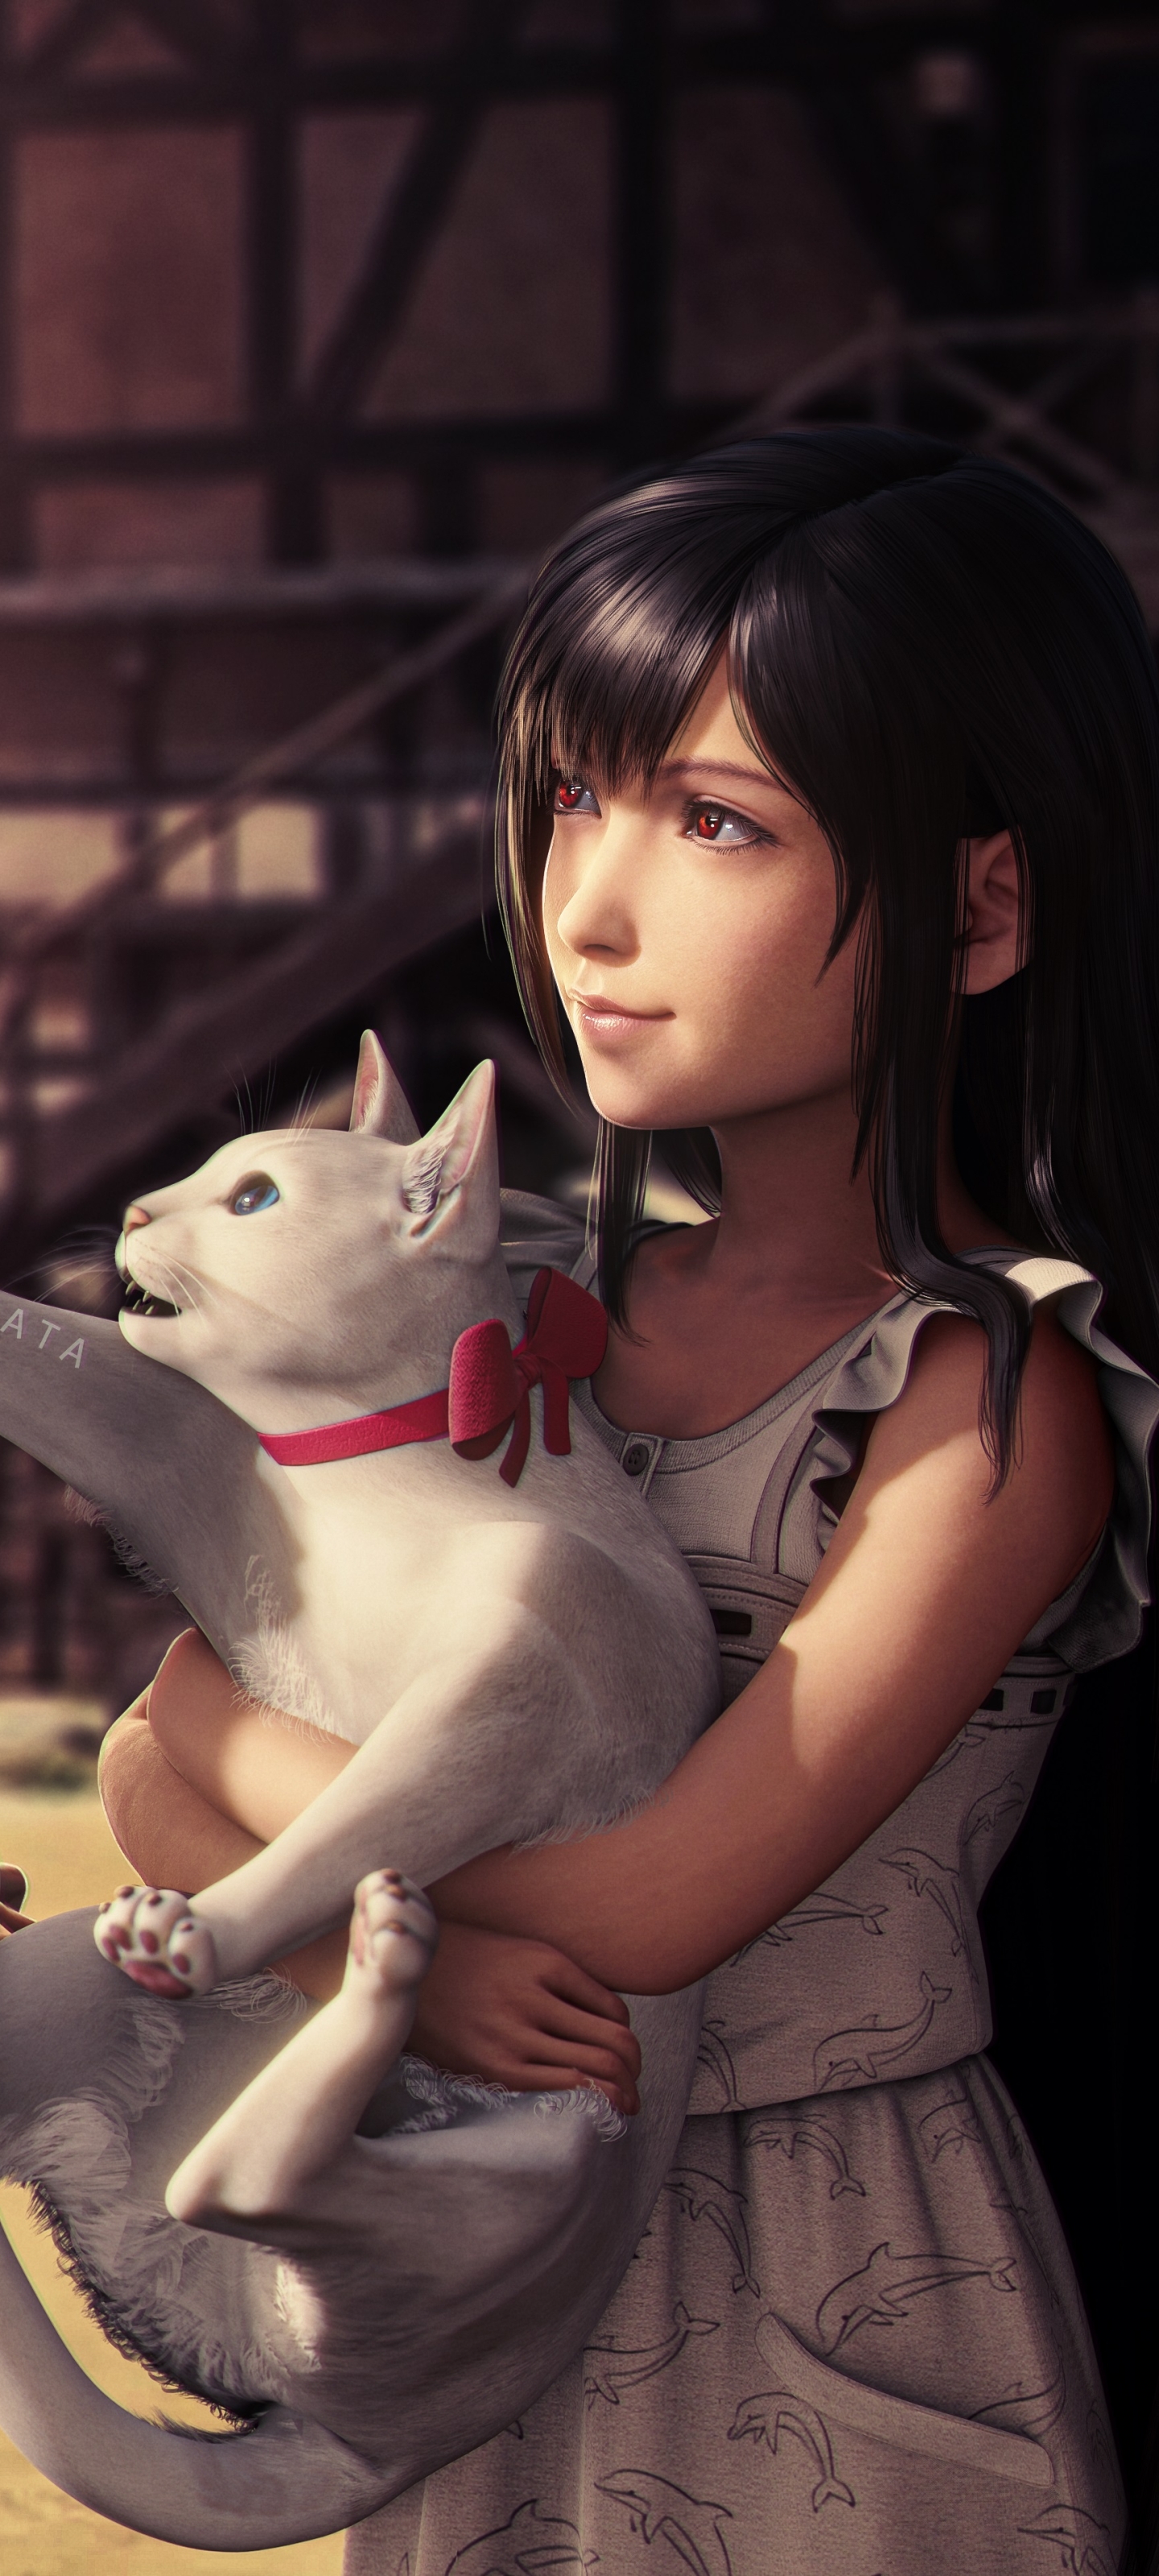 Descarga gratuita de fondo de pantalla para móvil de Gato, Videojuego, Tifa Lockhart, Fantasía Final, Final Fantasy Vii Remake.